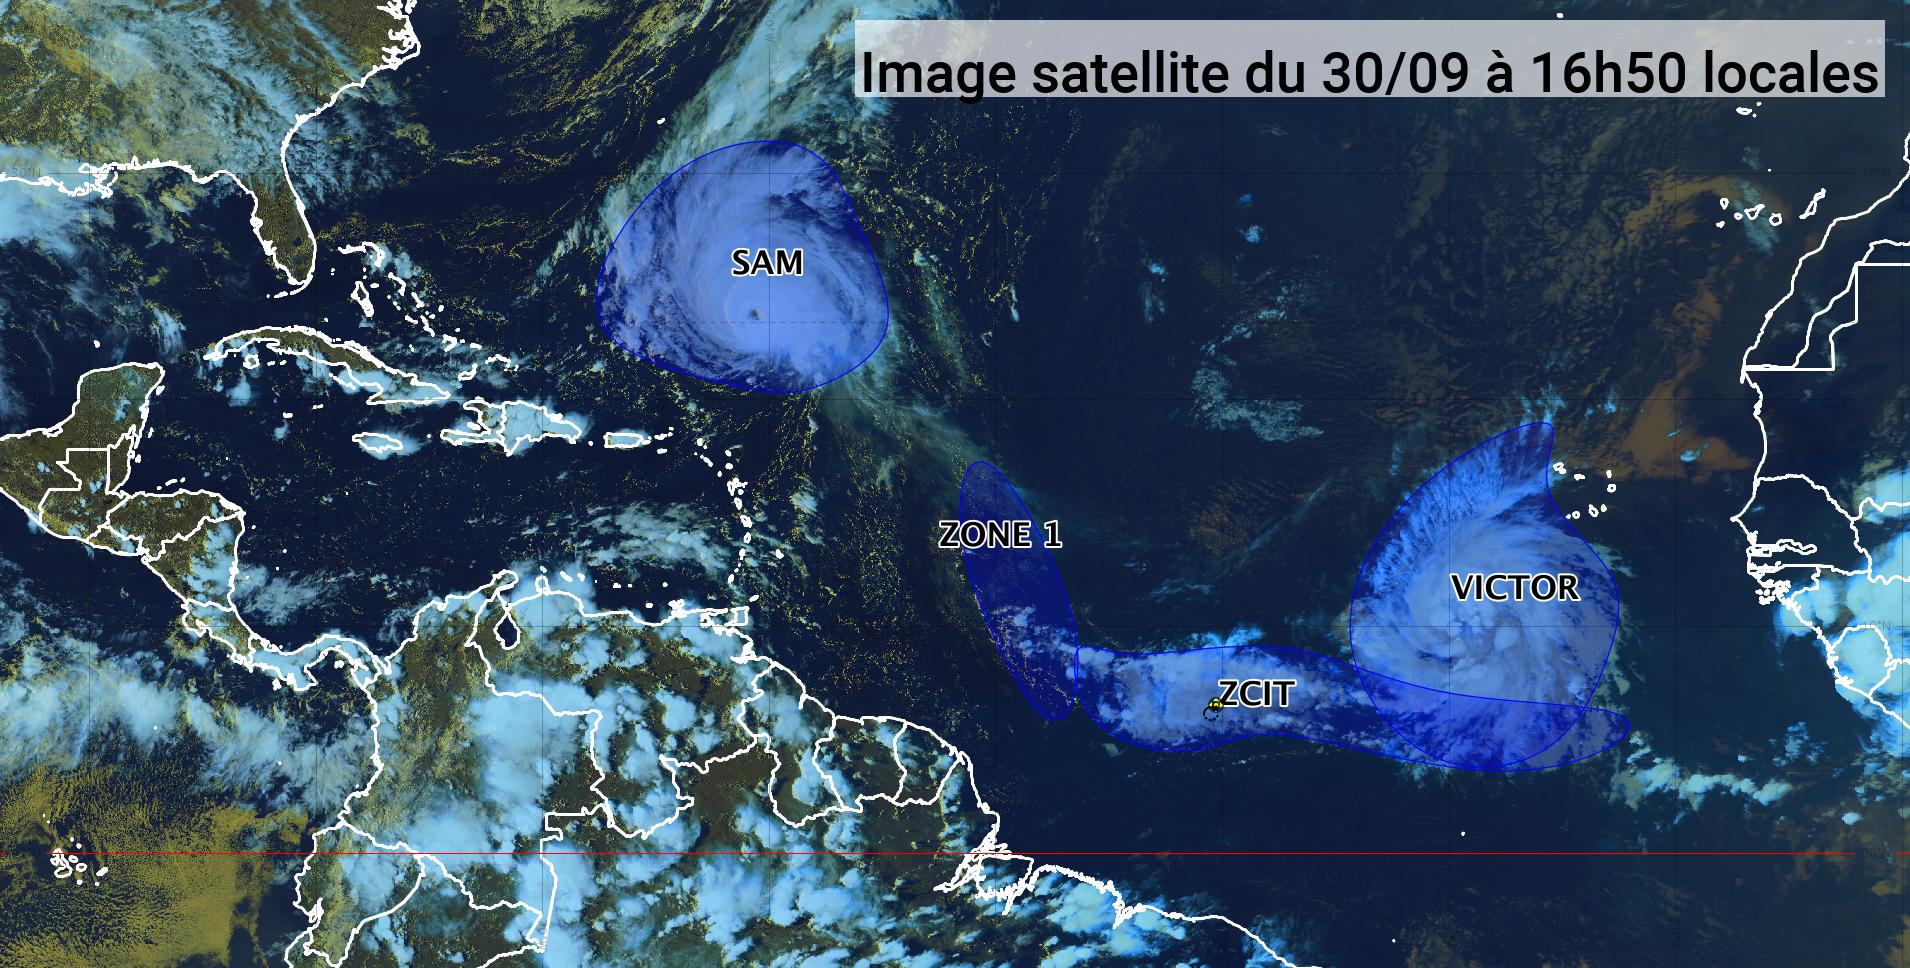     L'ouragan Sam s'éloigne et Victor continue sa route vers le nord (bulletin du 30/09/21)

